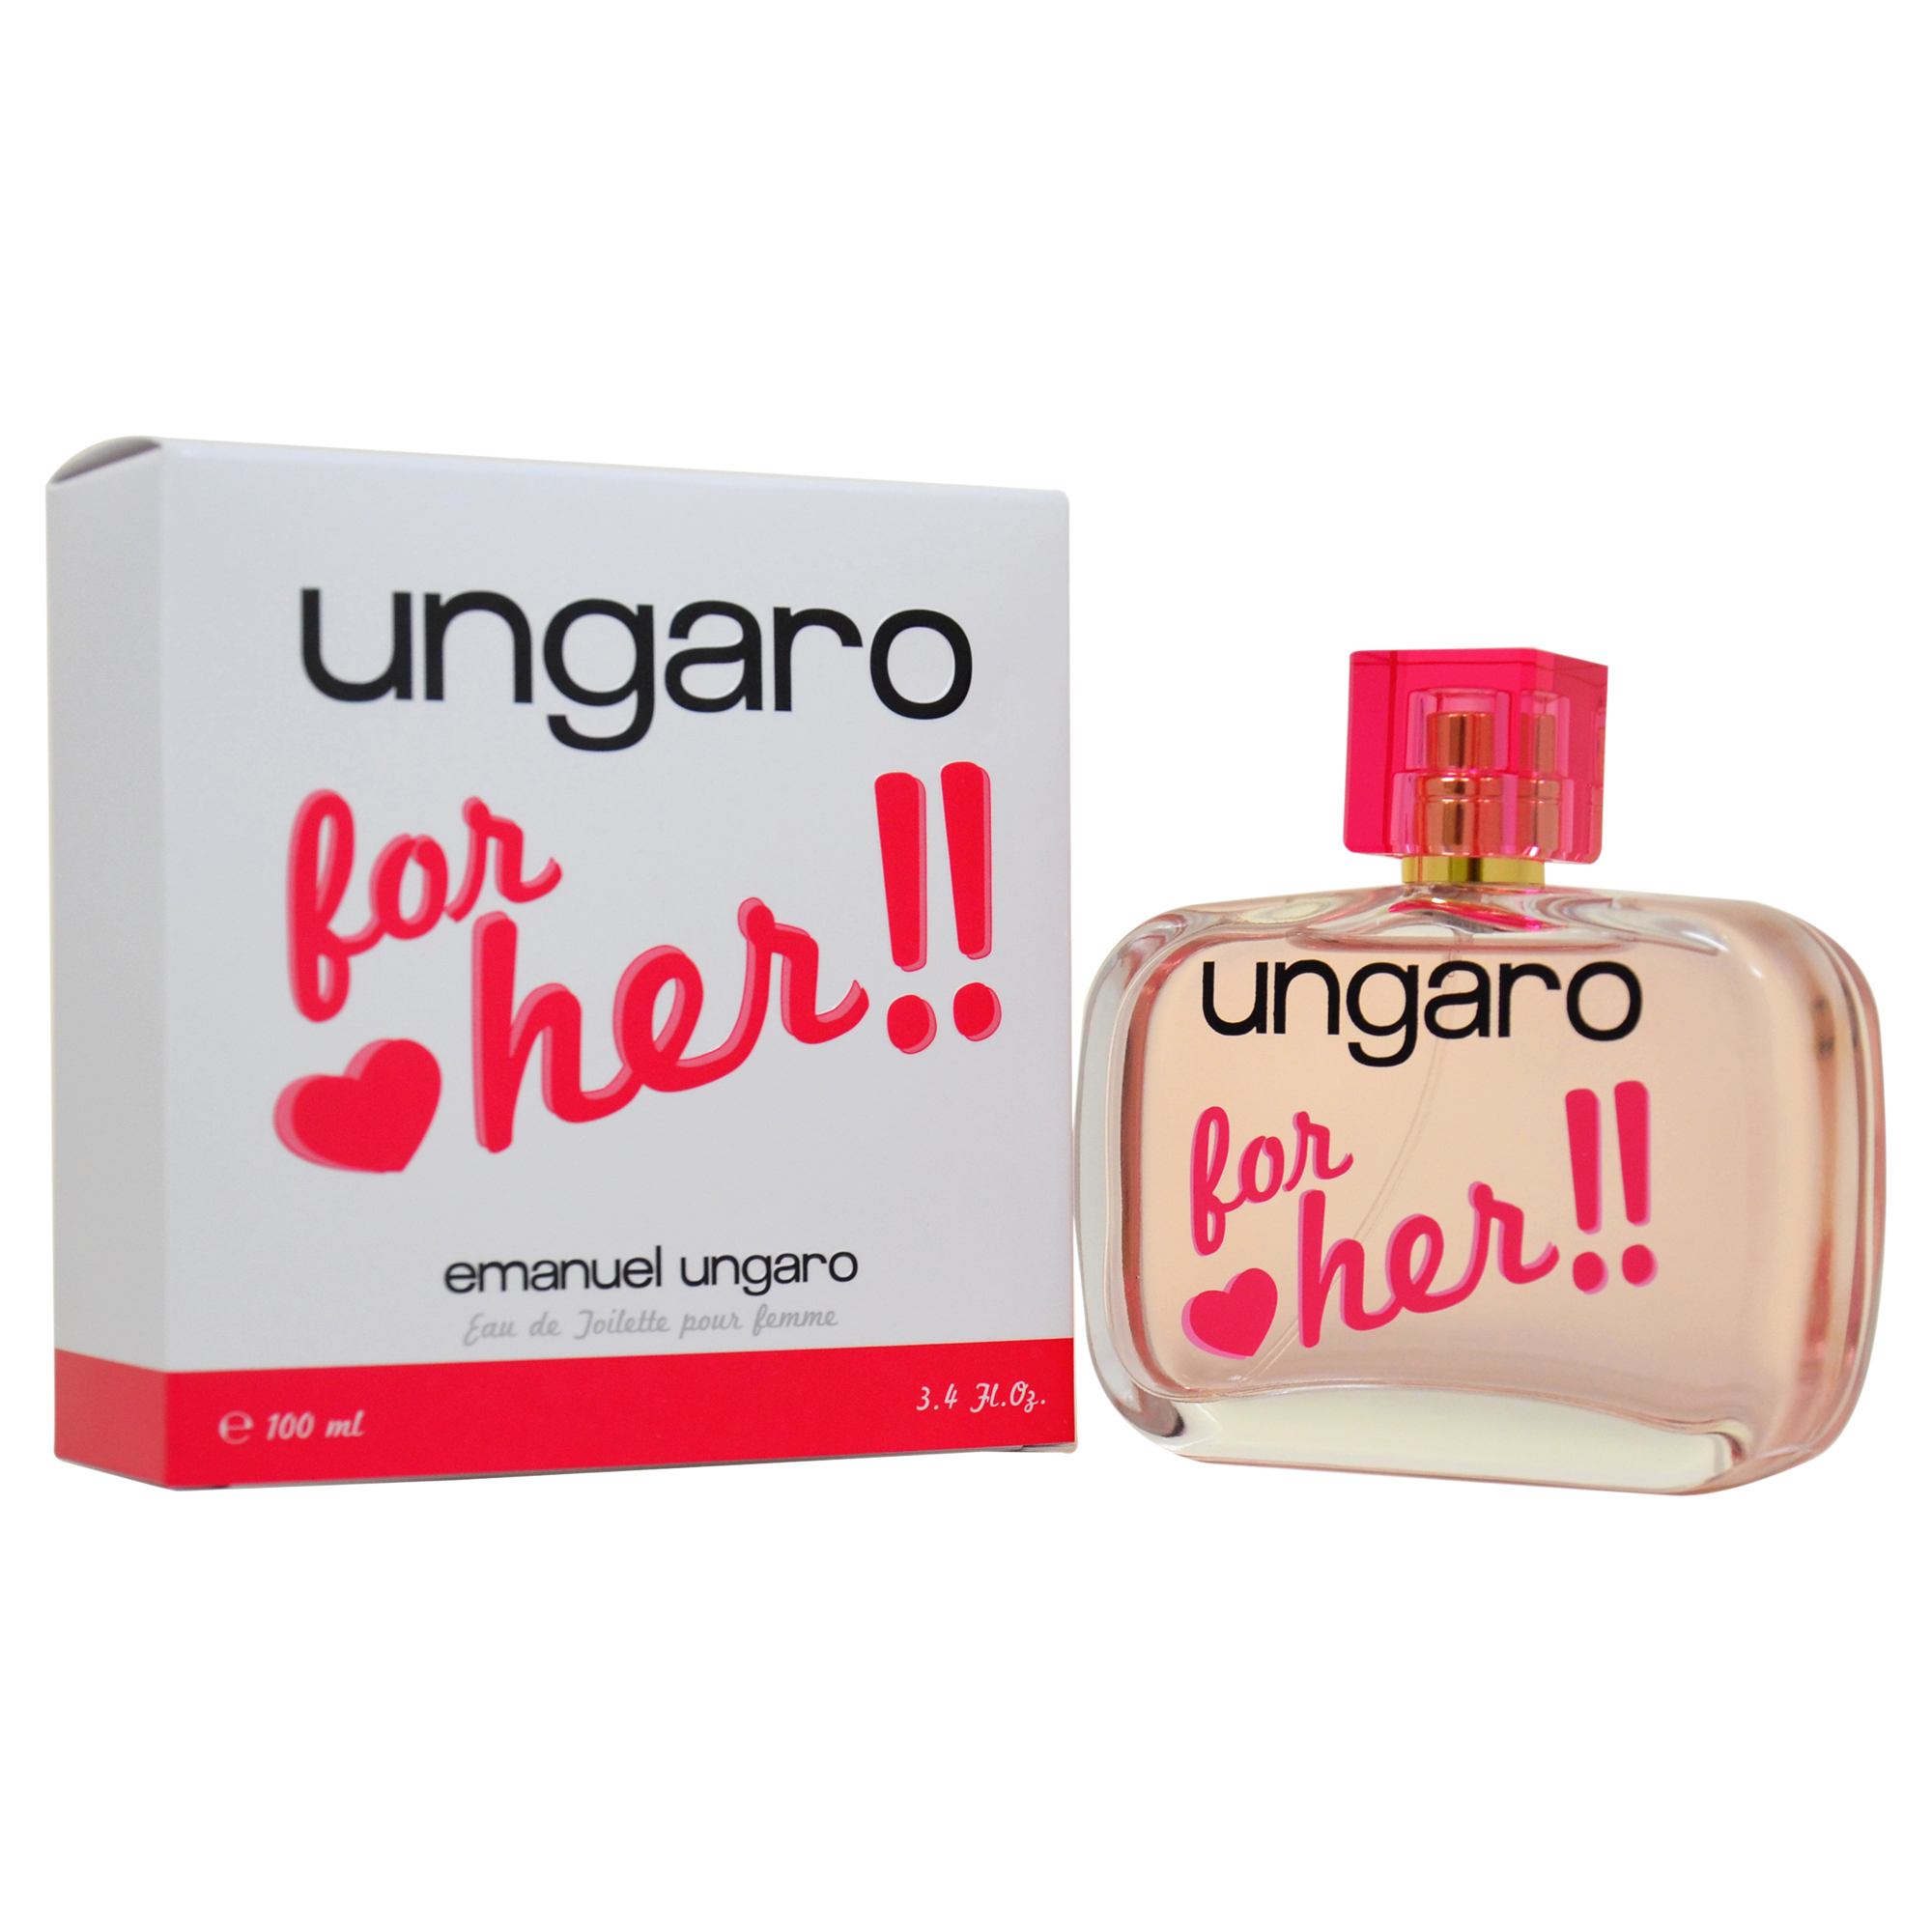 Ungaro For Her by Emanuel Ungaro for Women - 3.4 oz EDT Spray